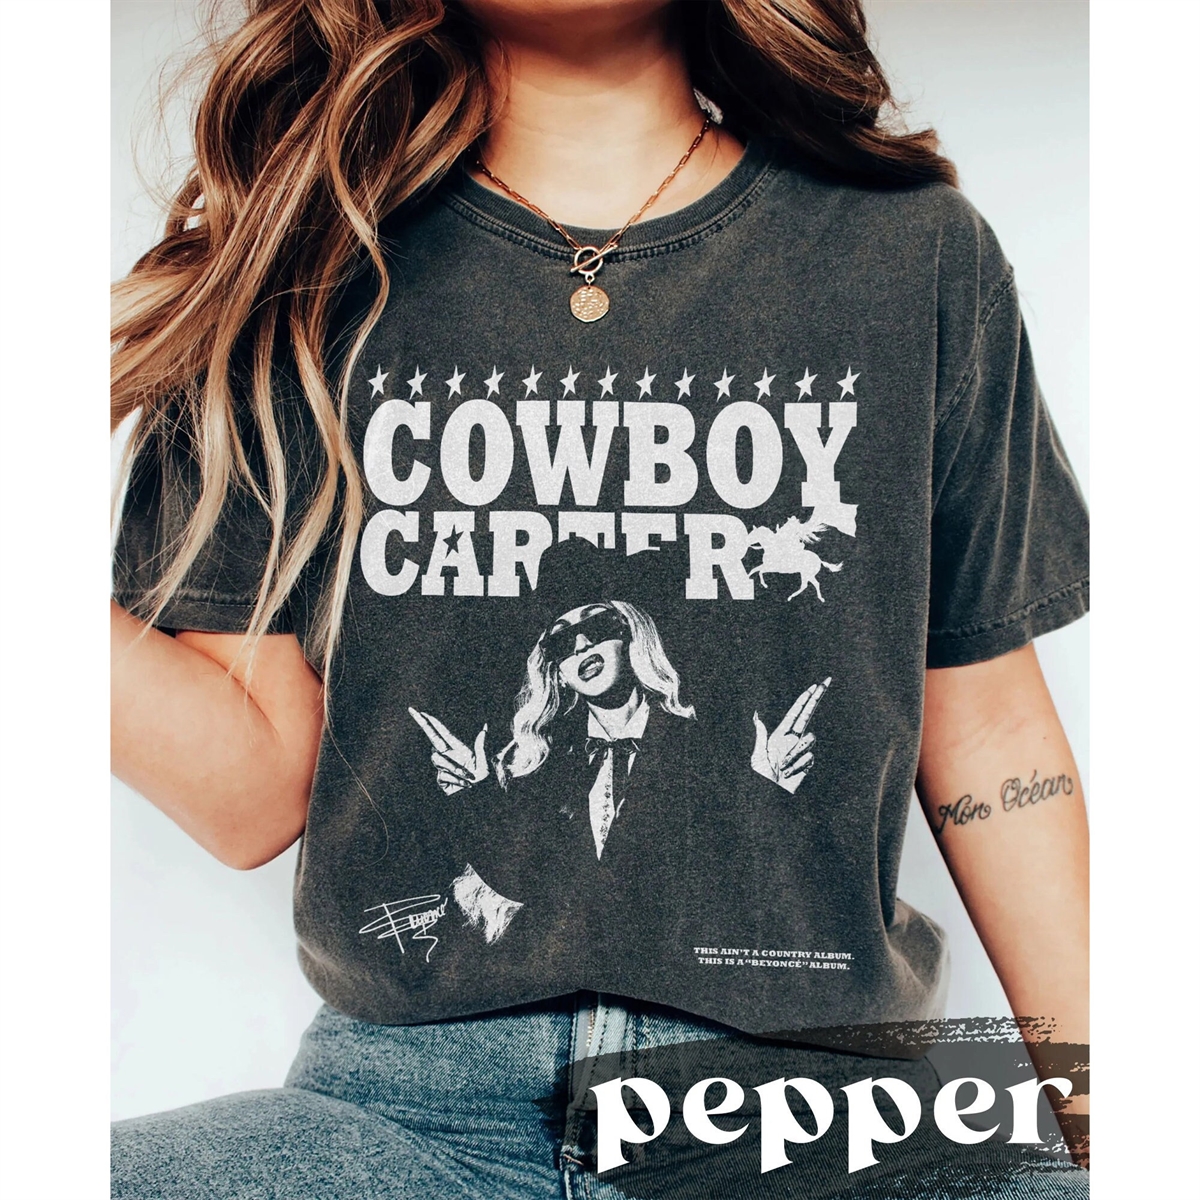 Beyonce Cowboy Carter Shirt Levii’s Jeans Shirt Post Malone Shirt Beyhive Exclusive Merch Cowboy Carter Tee Beyonc Shirt Gift For Her